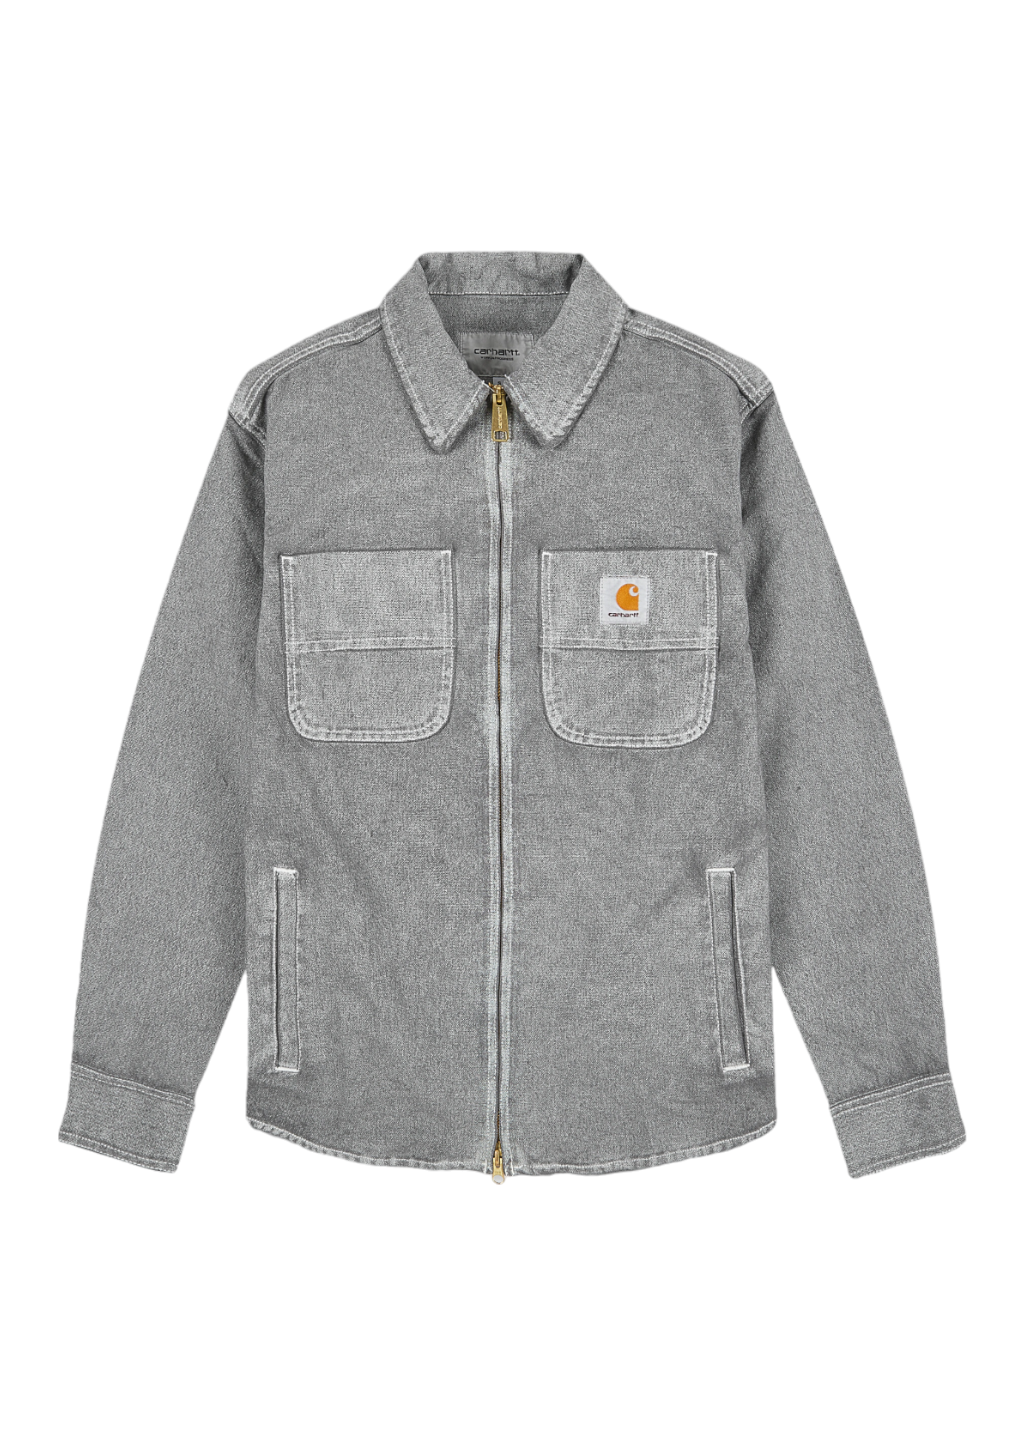 Carhartt WIP - Garen Shirt Jacket - Wax/Blacksmith Stone Washed - Hardpressed Print Studio Inc.